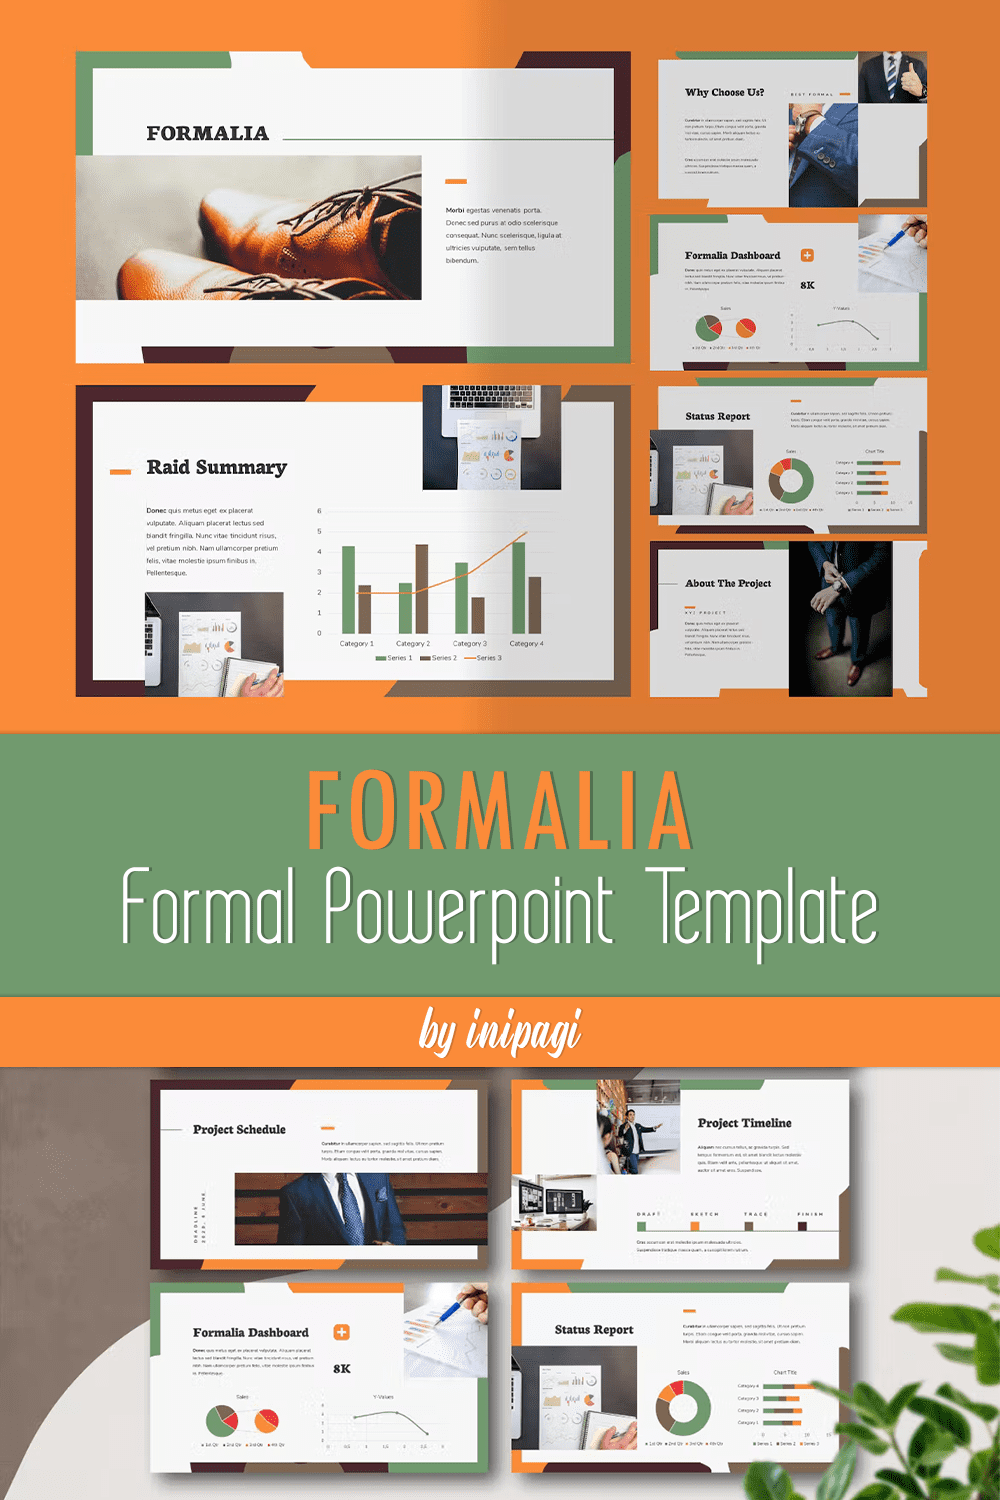 Formalia - Formal Powerpoint Template - Pinterest.